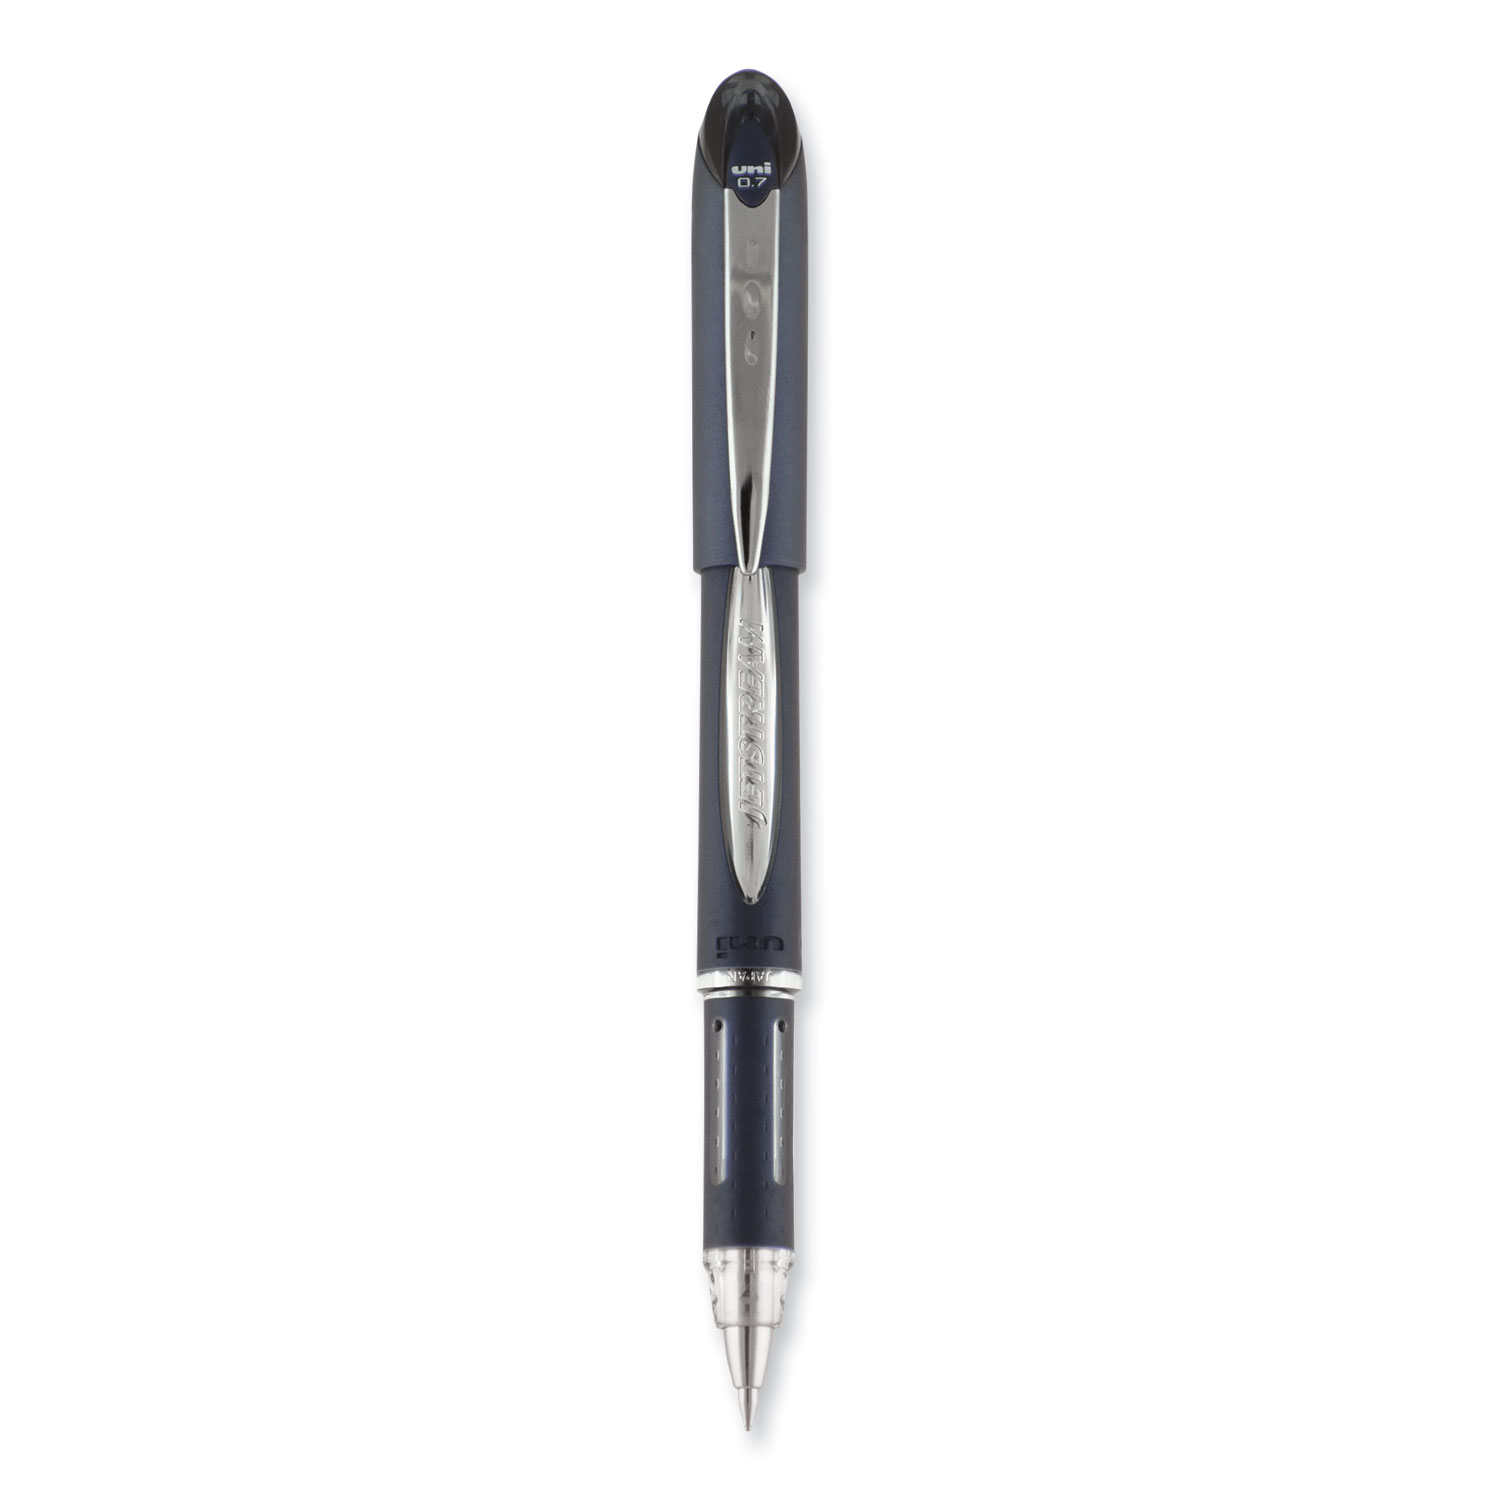 Basics Retractable Gel Ink Pens - Fine Point Pen, Black, 12-Pack